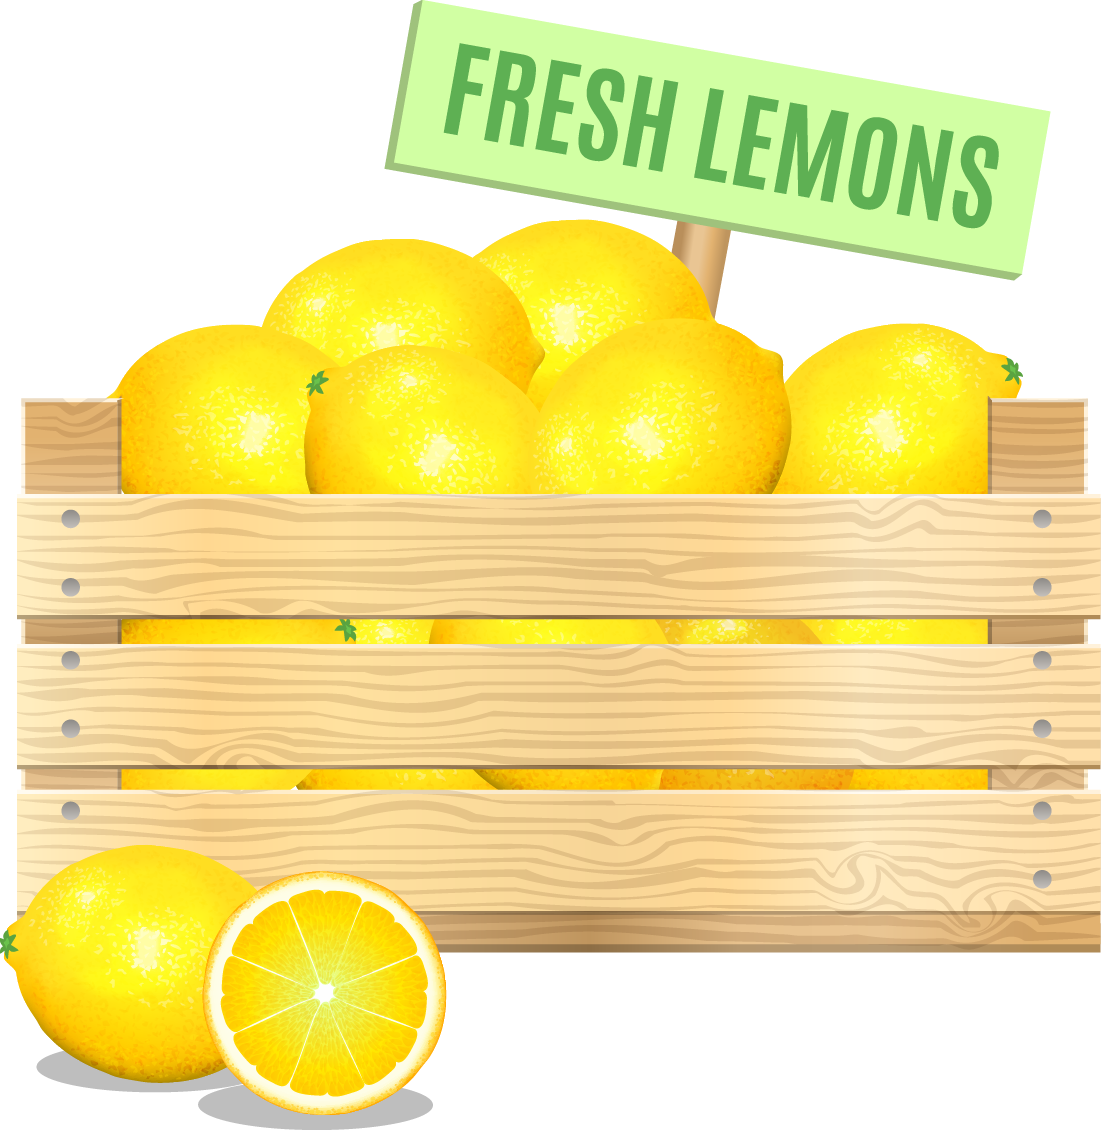 k-lemon (233)